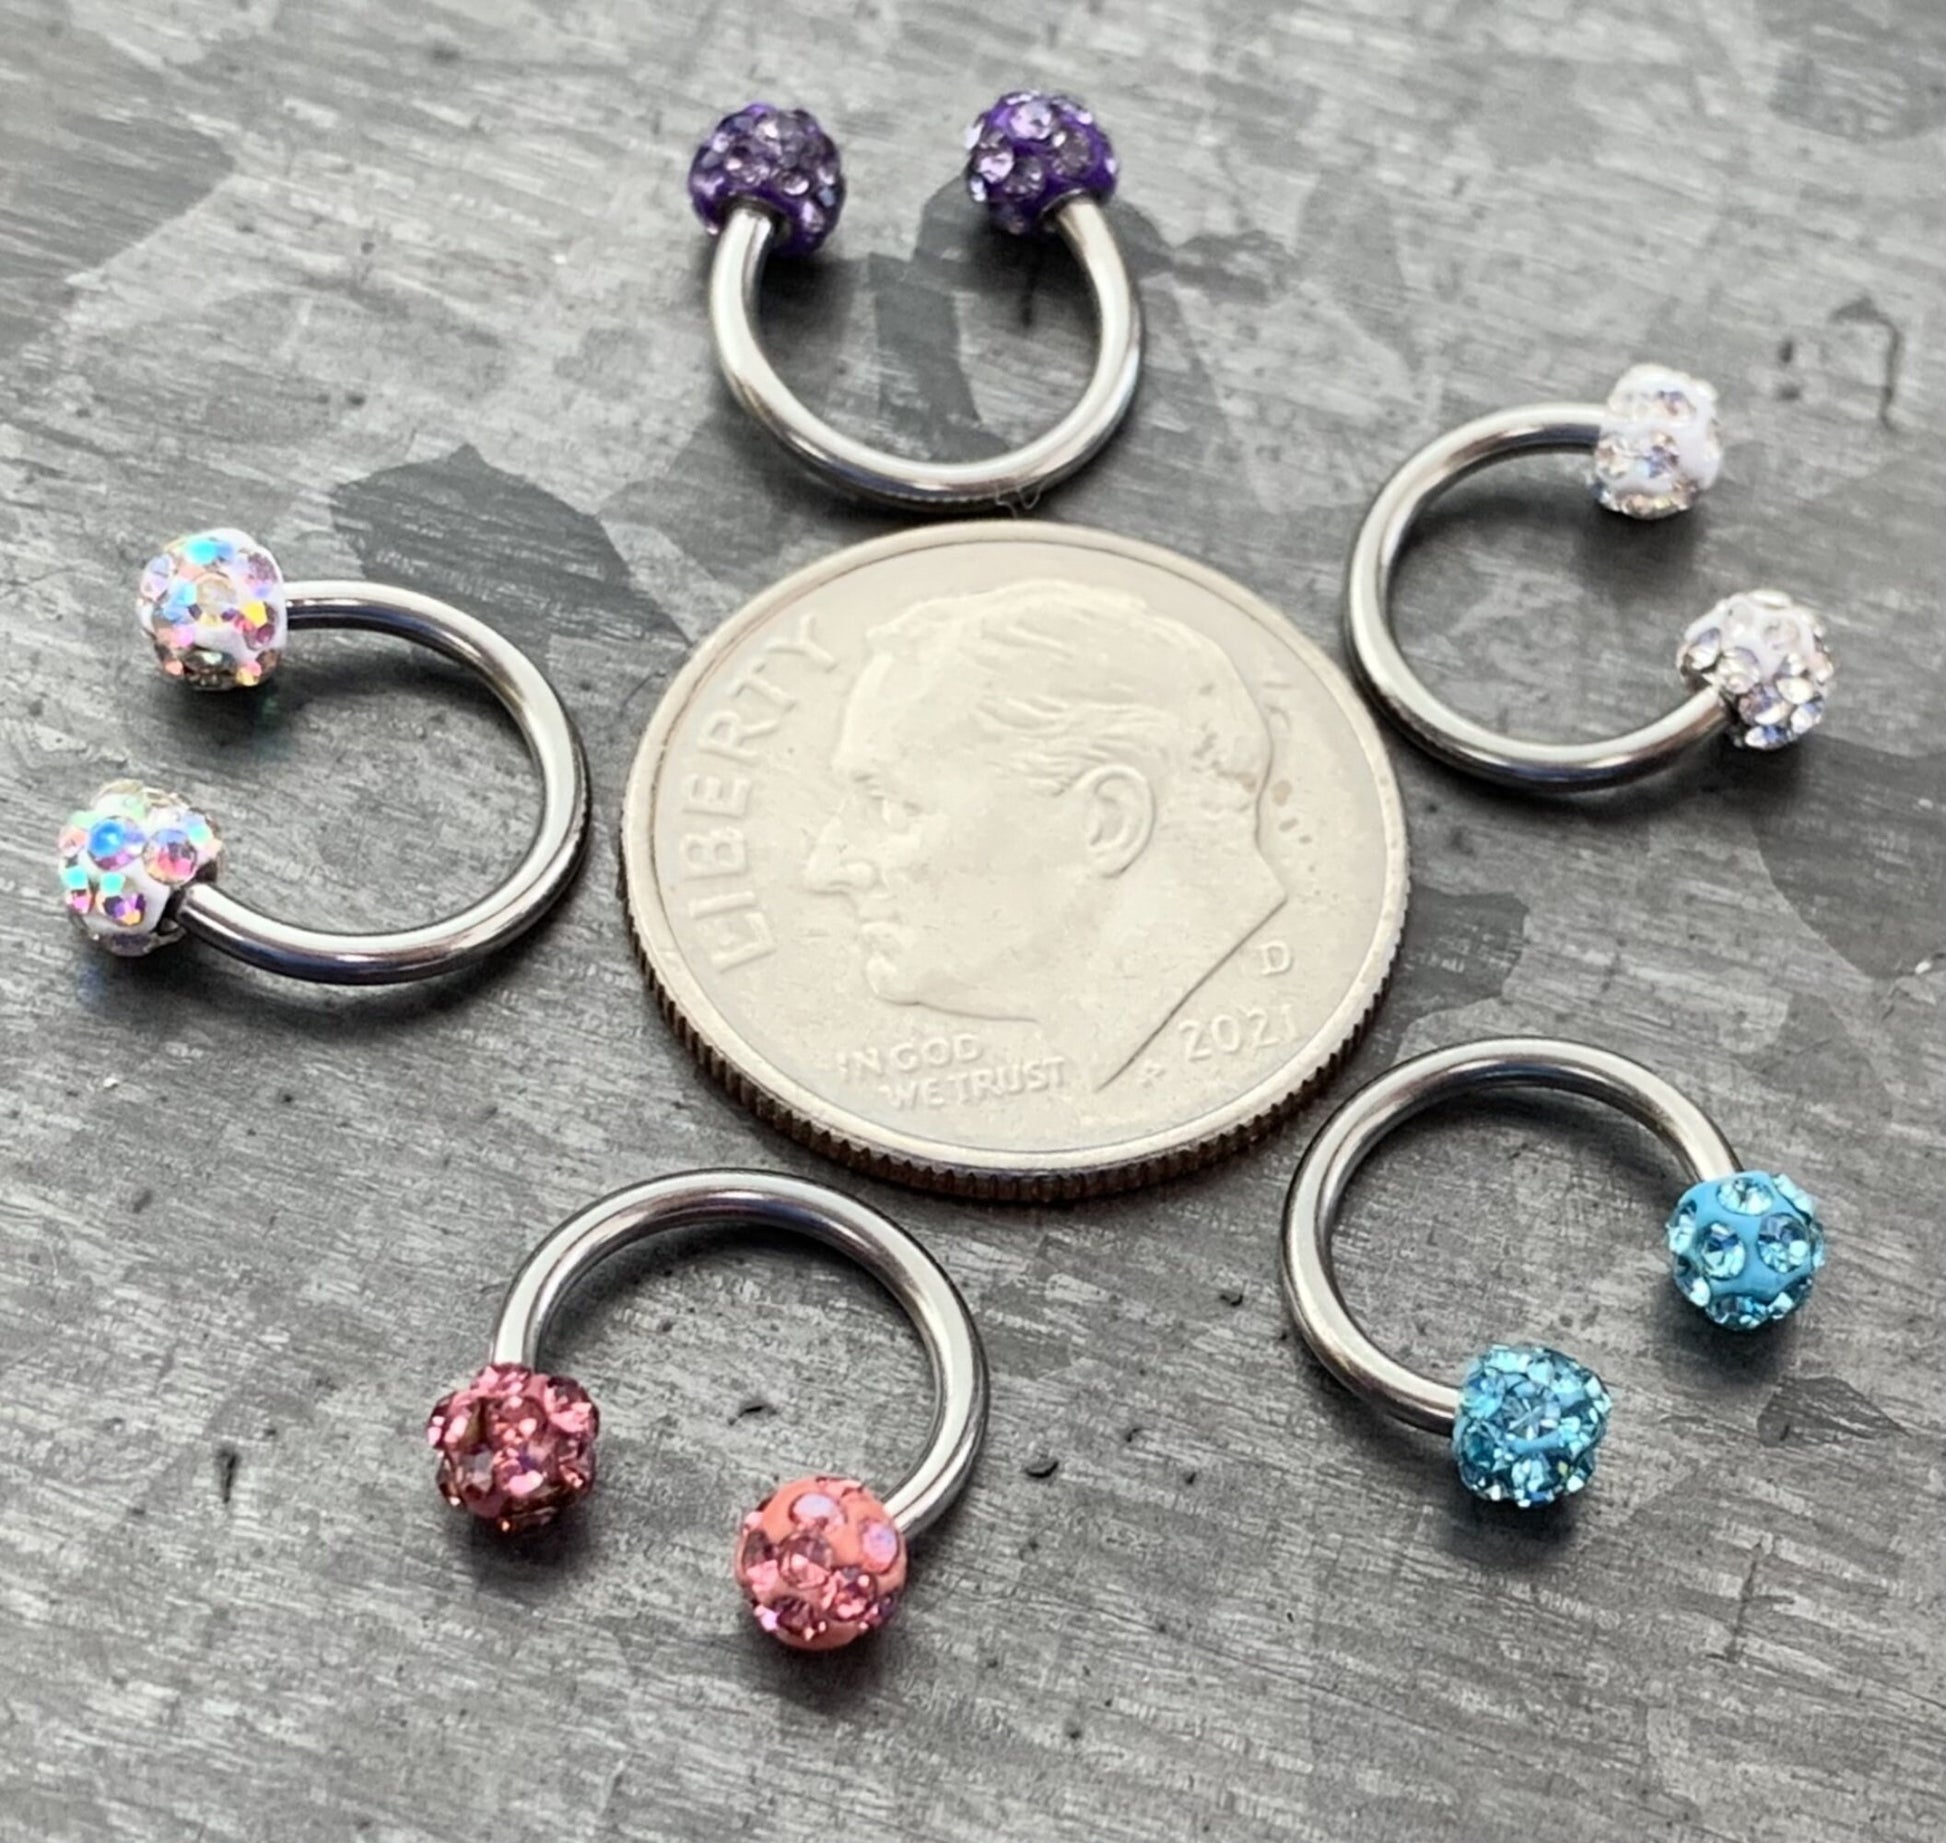 1 Piece Crystal Paved Ferido Balls Horseshoe Circular Septum Ring - 16g, 8mm - Aurora Borealis, White, Pink, Blue or Purple Available!